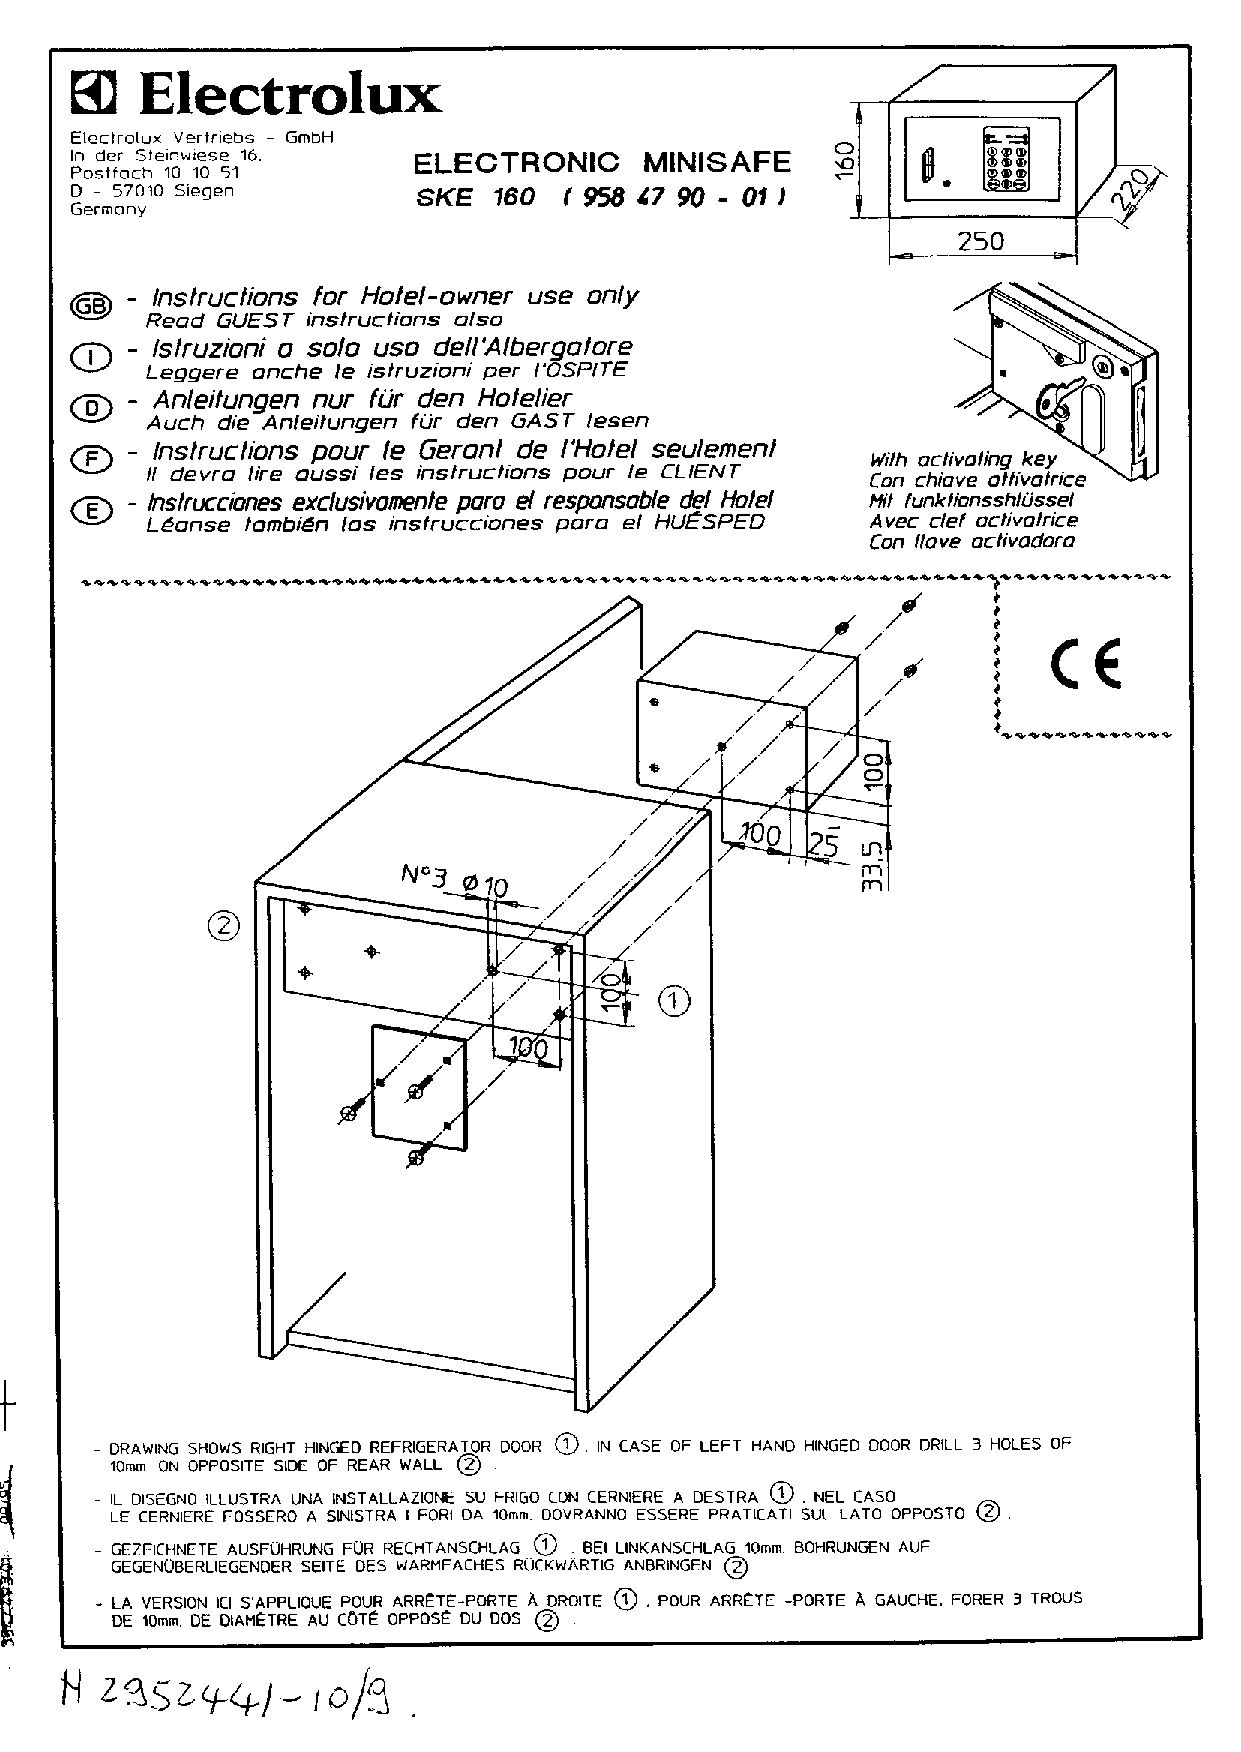 AEG-Electrolux SKE160 User Manual